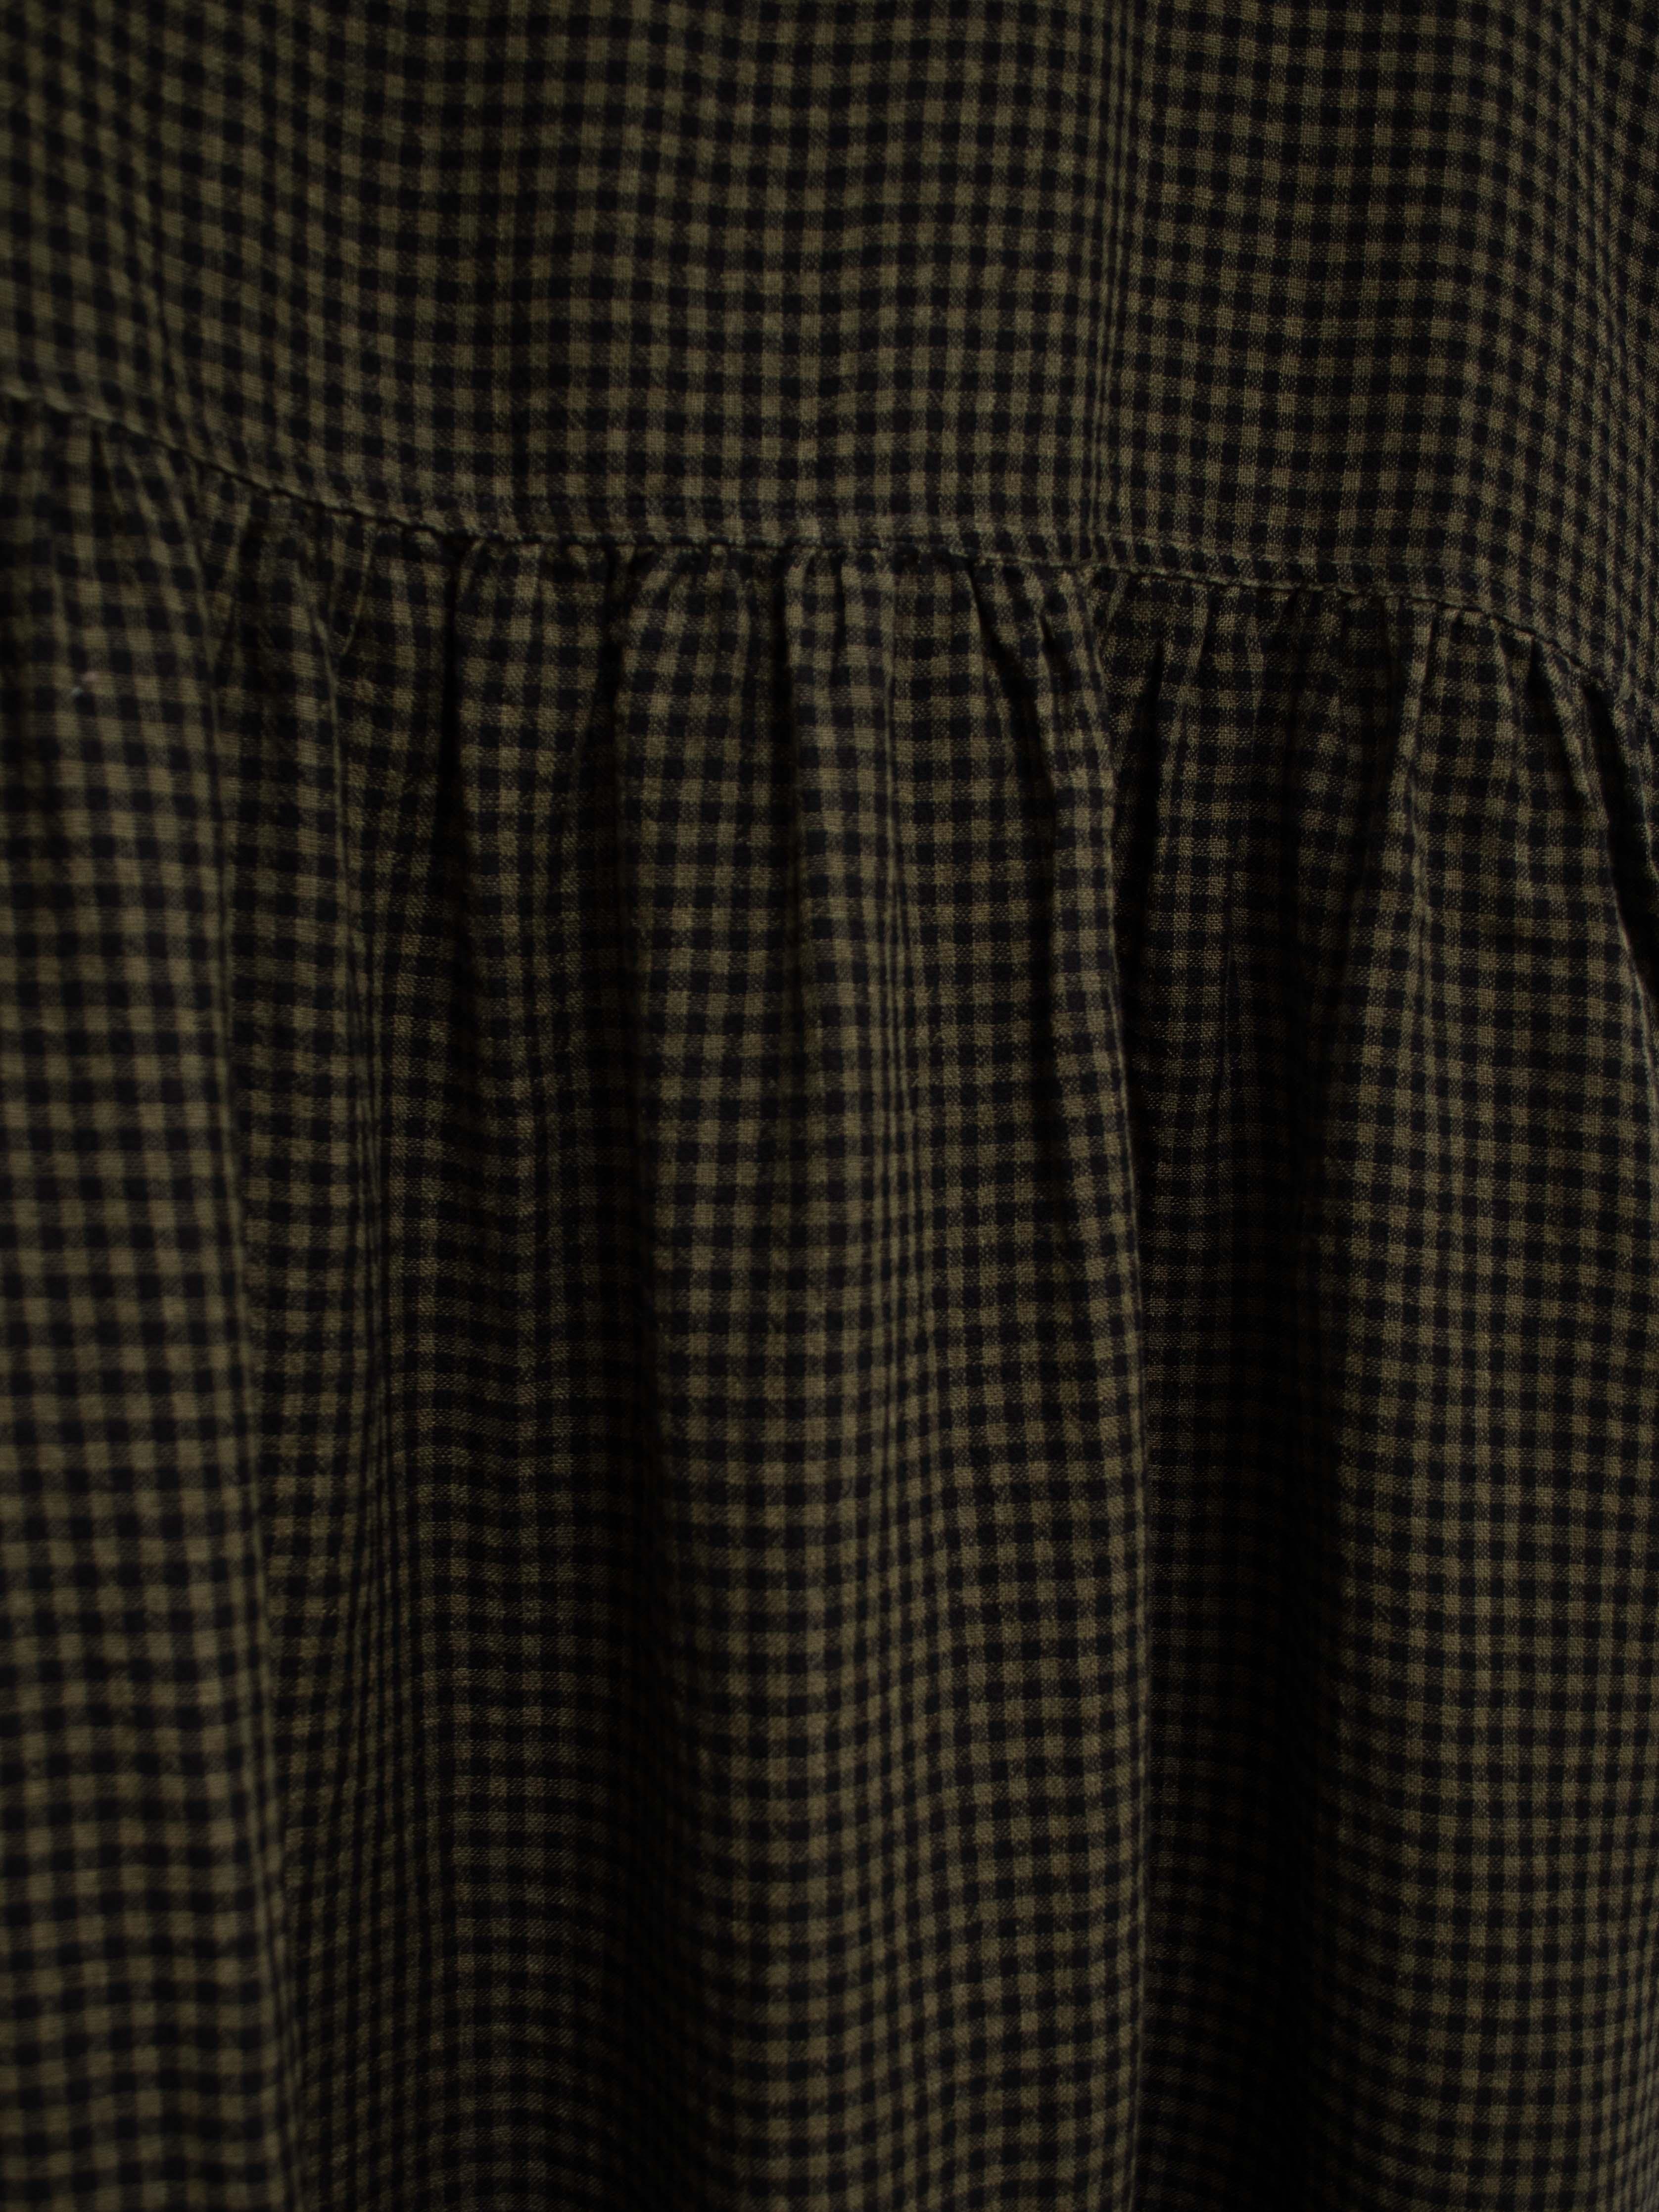 Namu Shop - Ichi Antiquites Wool Linen Gingham Dress - Olive x Black